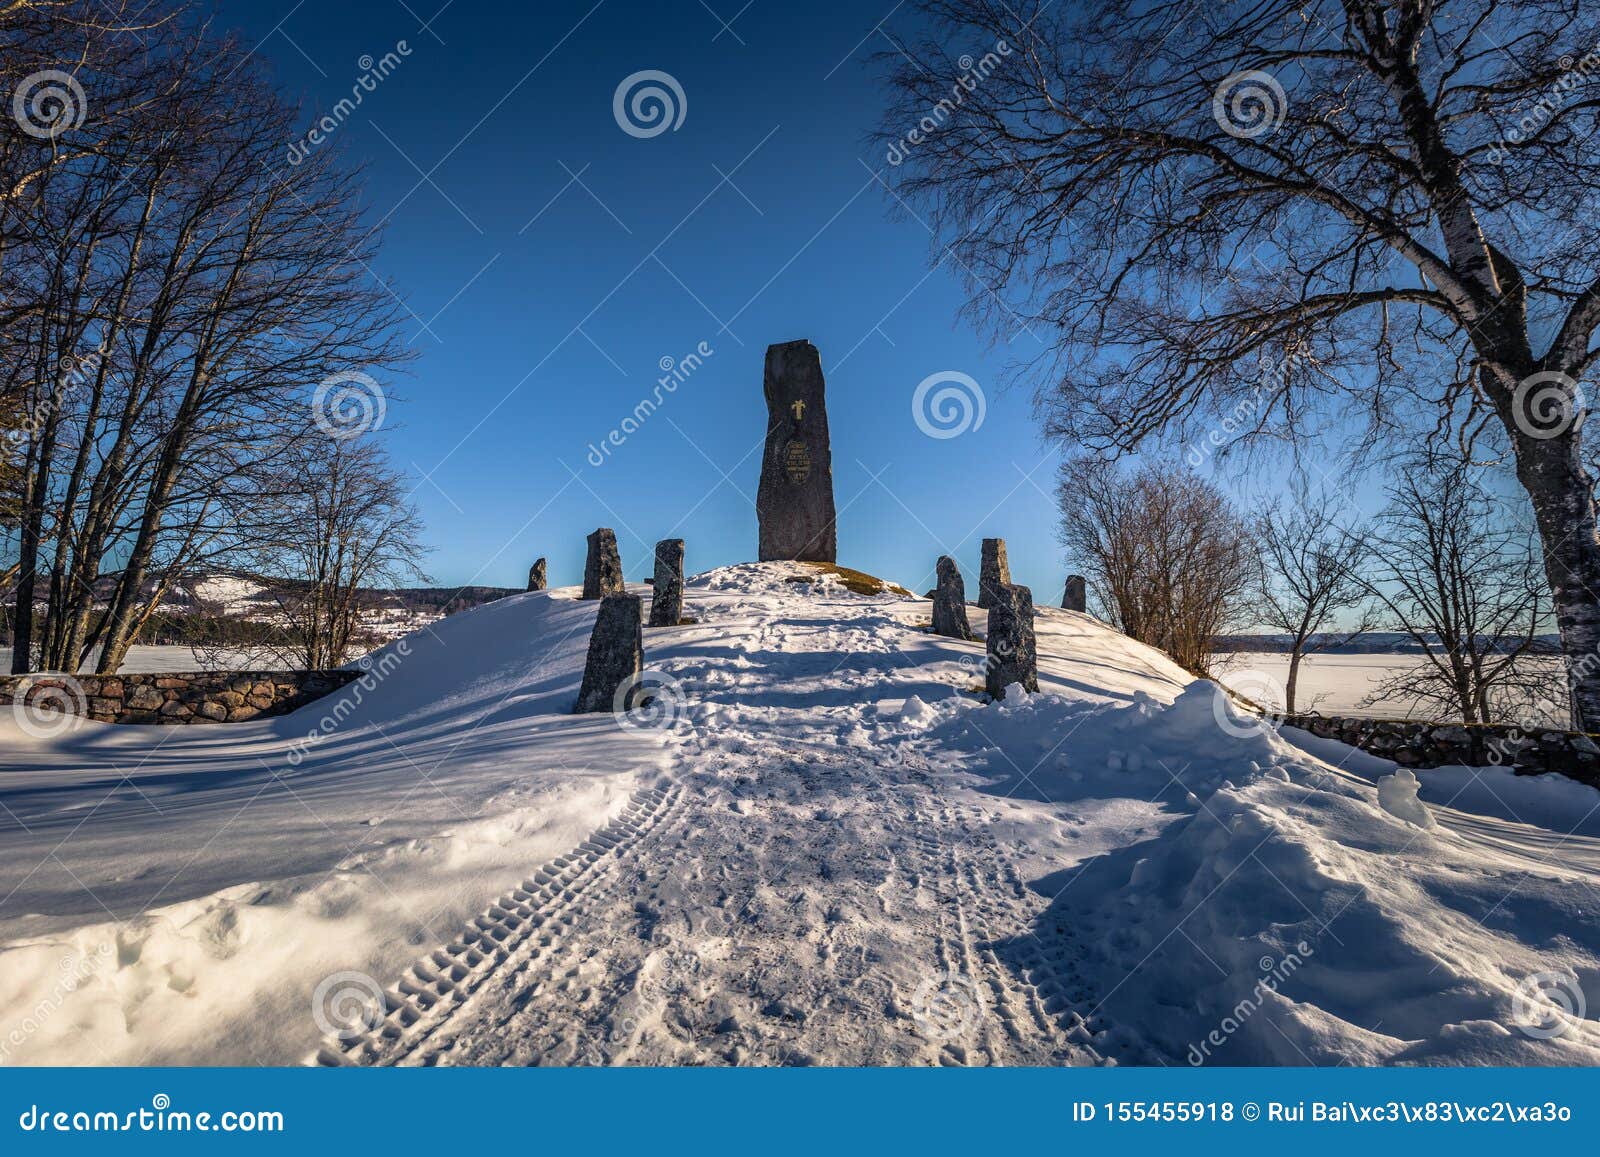 rattvik - march 30, 2018: king gustav vasa memorial runestone in rattvik, dalarna, sweden